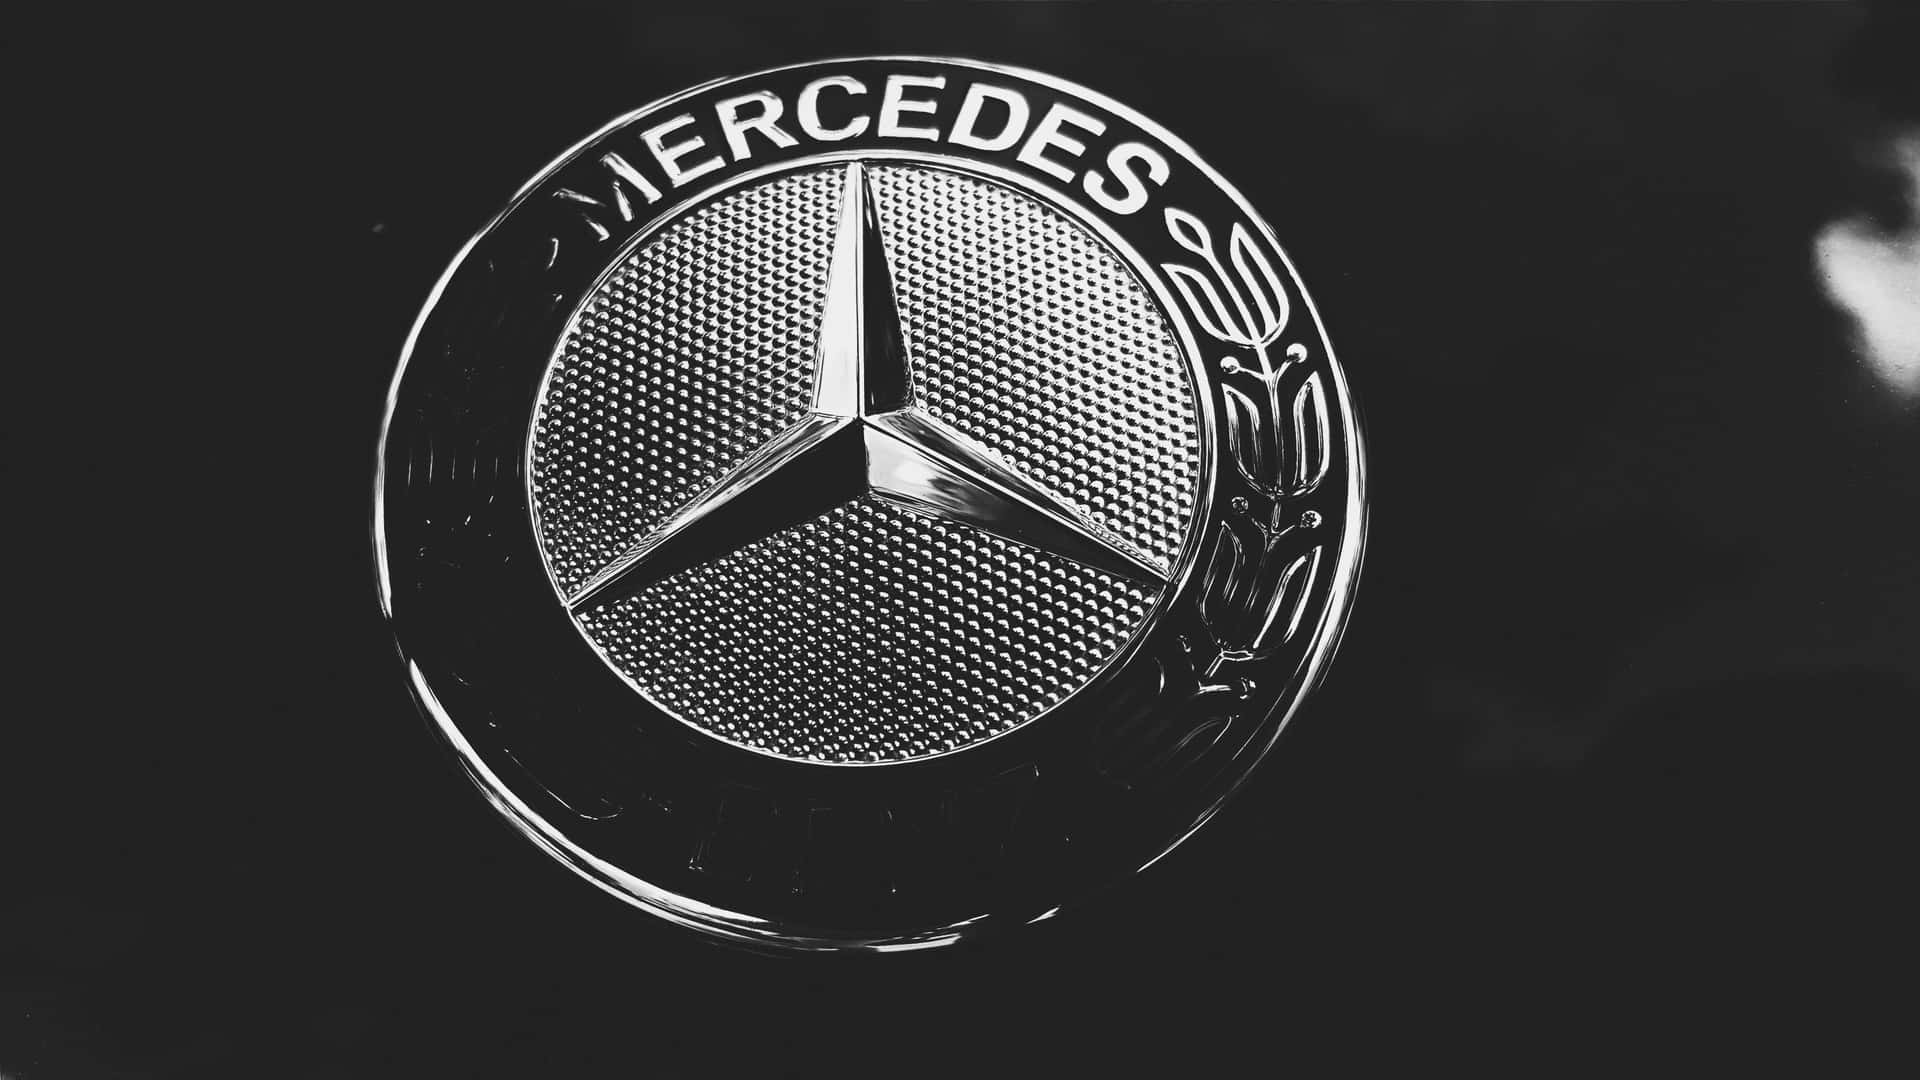 "The Iconic Mercedes Benz Logo"